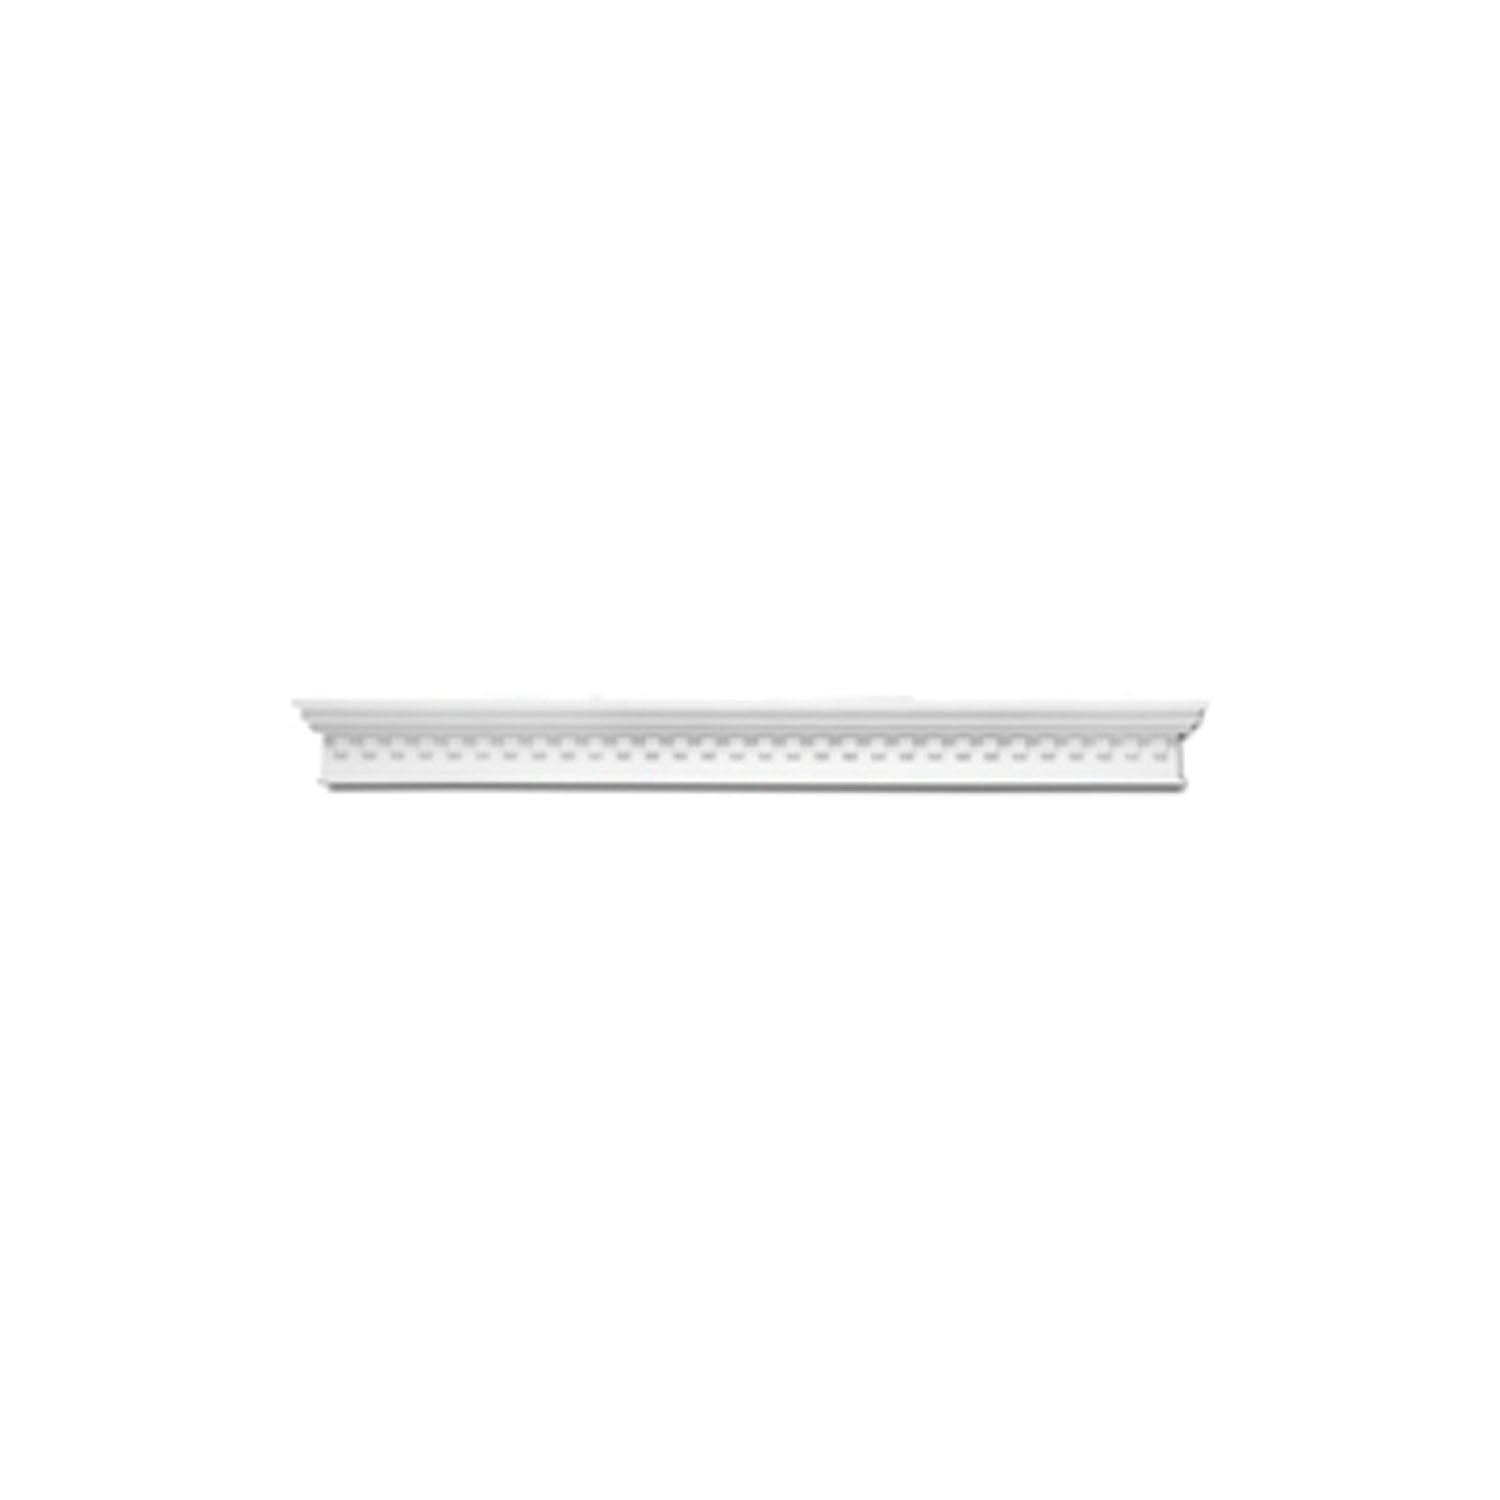 Focal Point Lighting 97920 Decorative Crossheads Crosshead Decor White